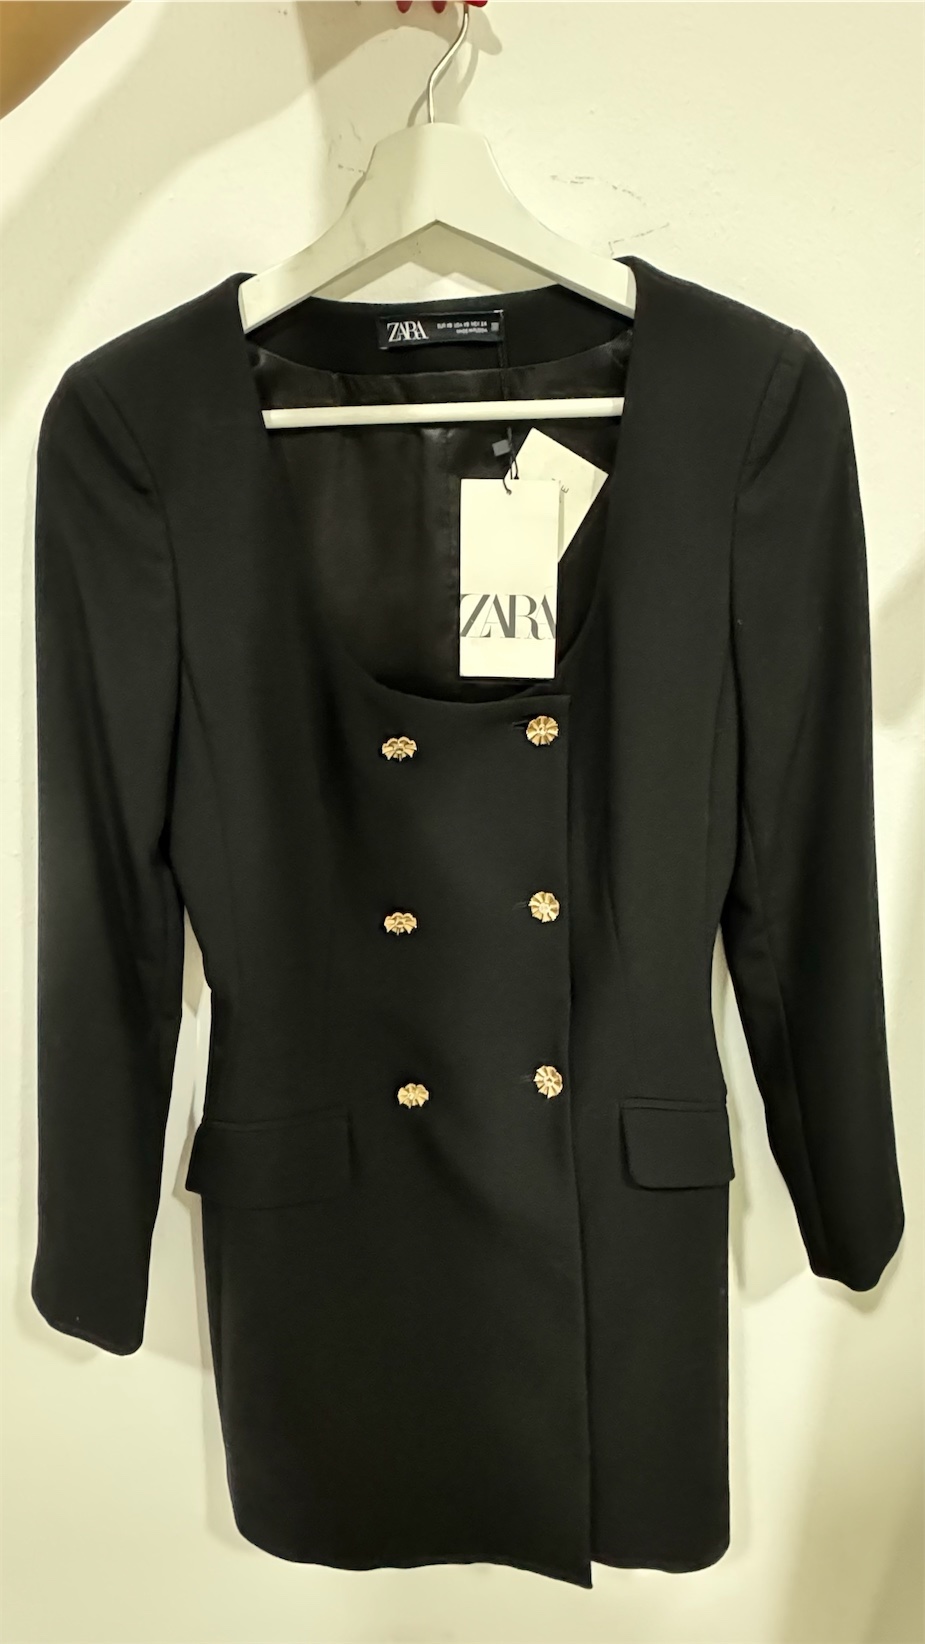 ropa para mujer - Vestido XS Zara tipo chaqueta/blazer